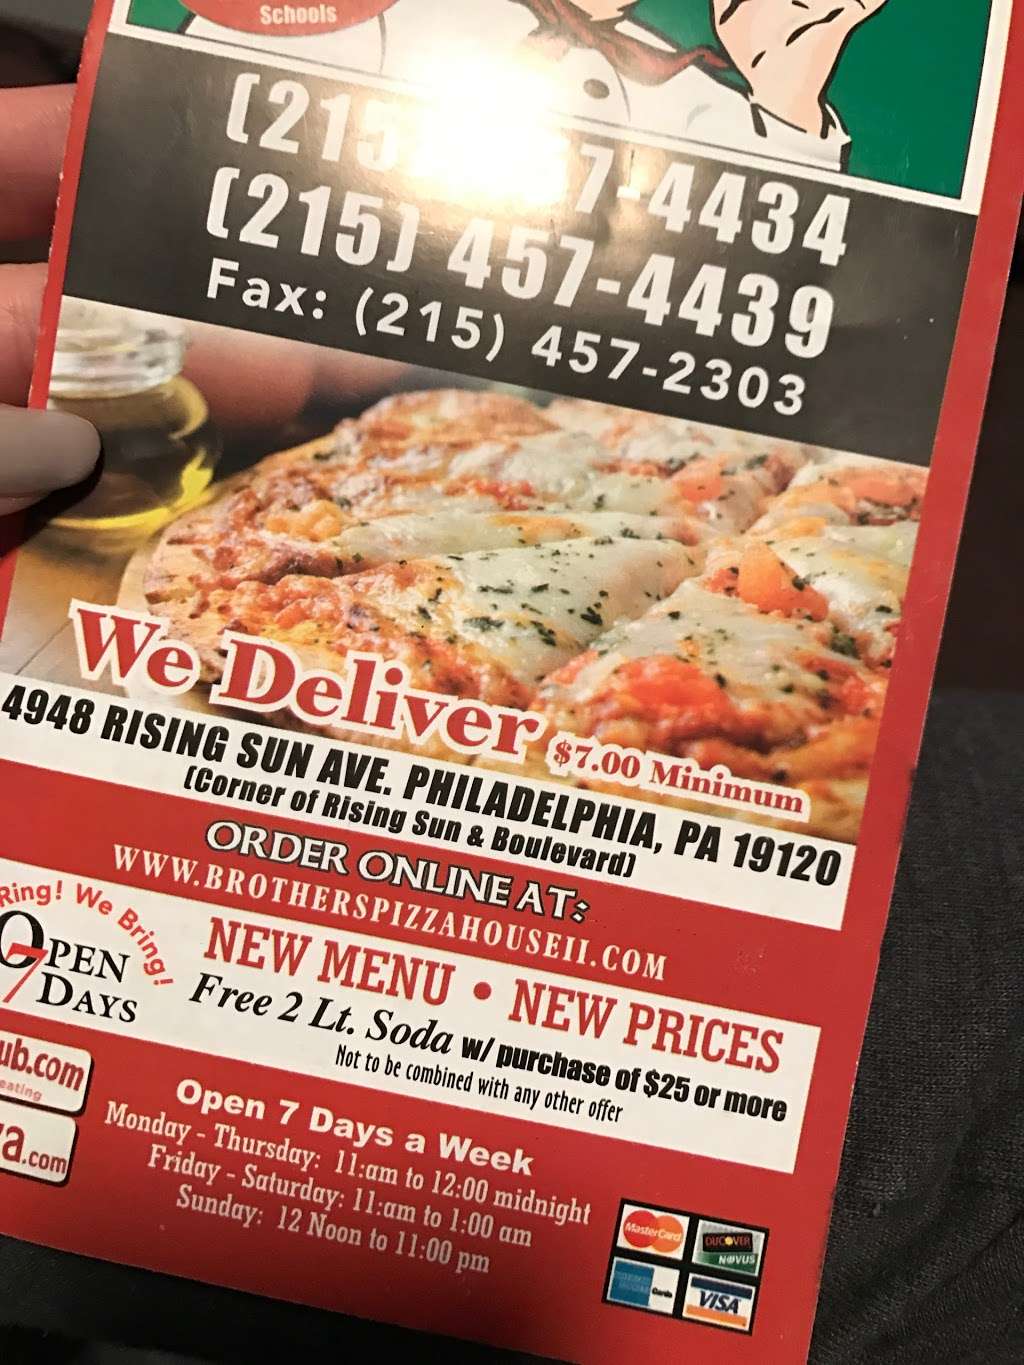 Brothers pizza House II | 3534, 4948 Rising Sun Ave, Philadelphia, PA 19120 | Phone: (215) 457-4434